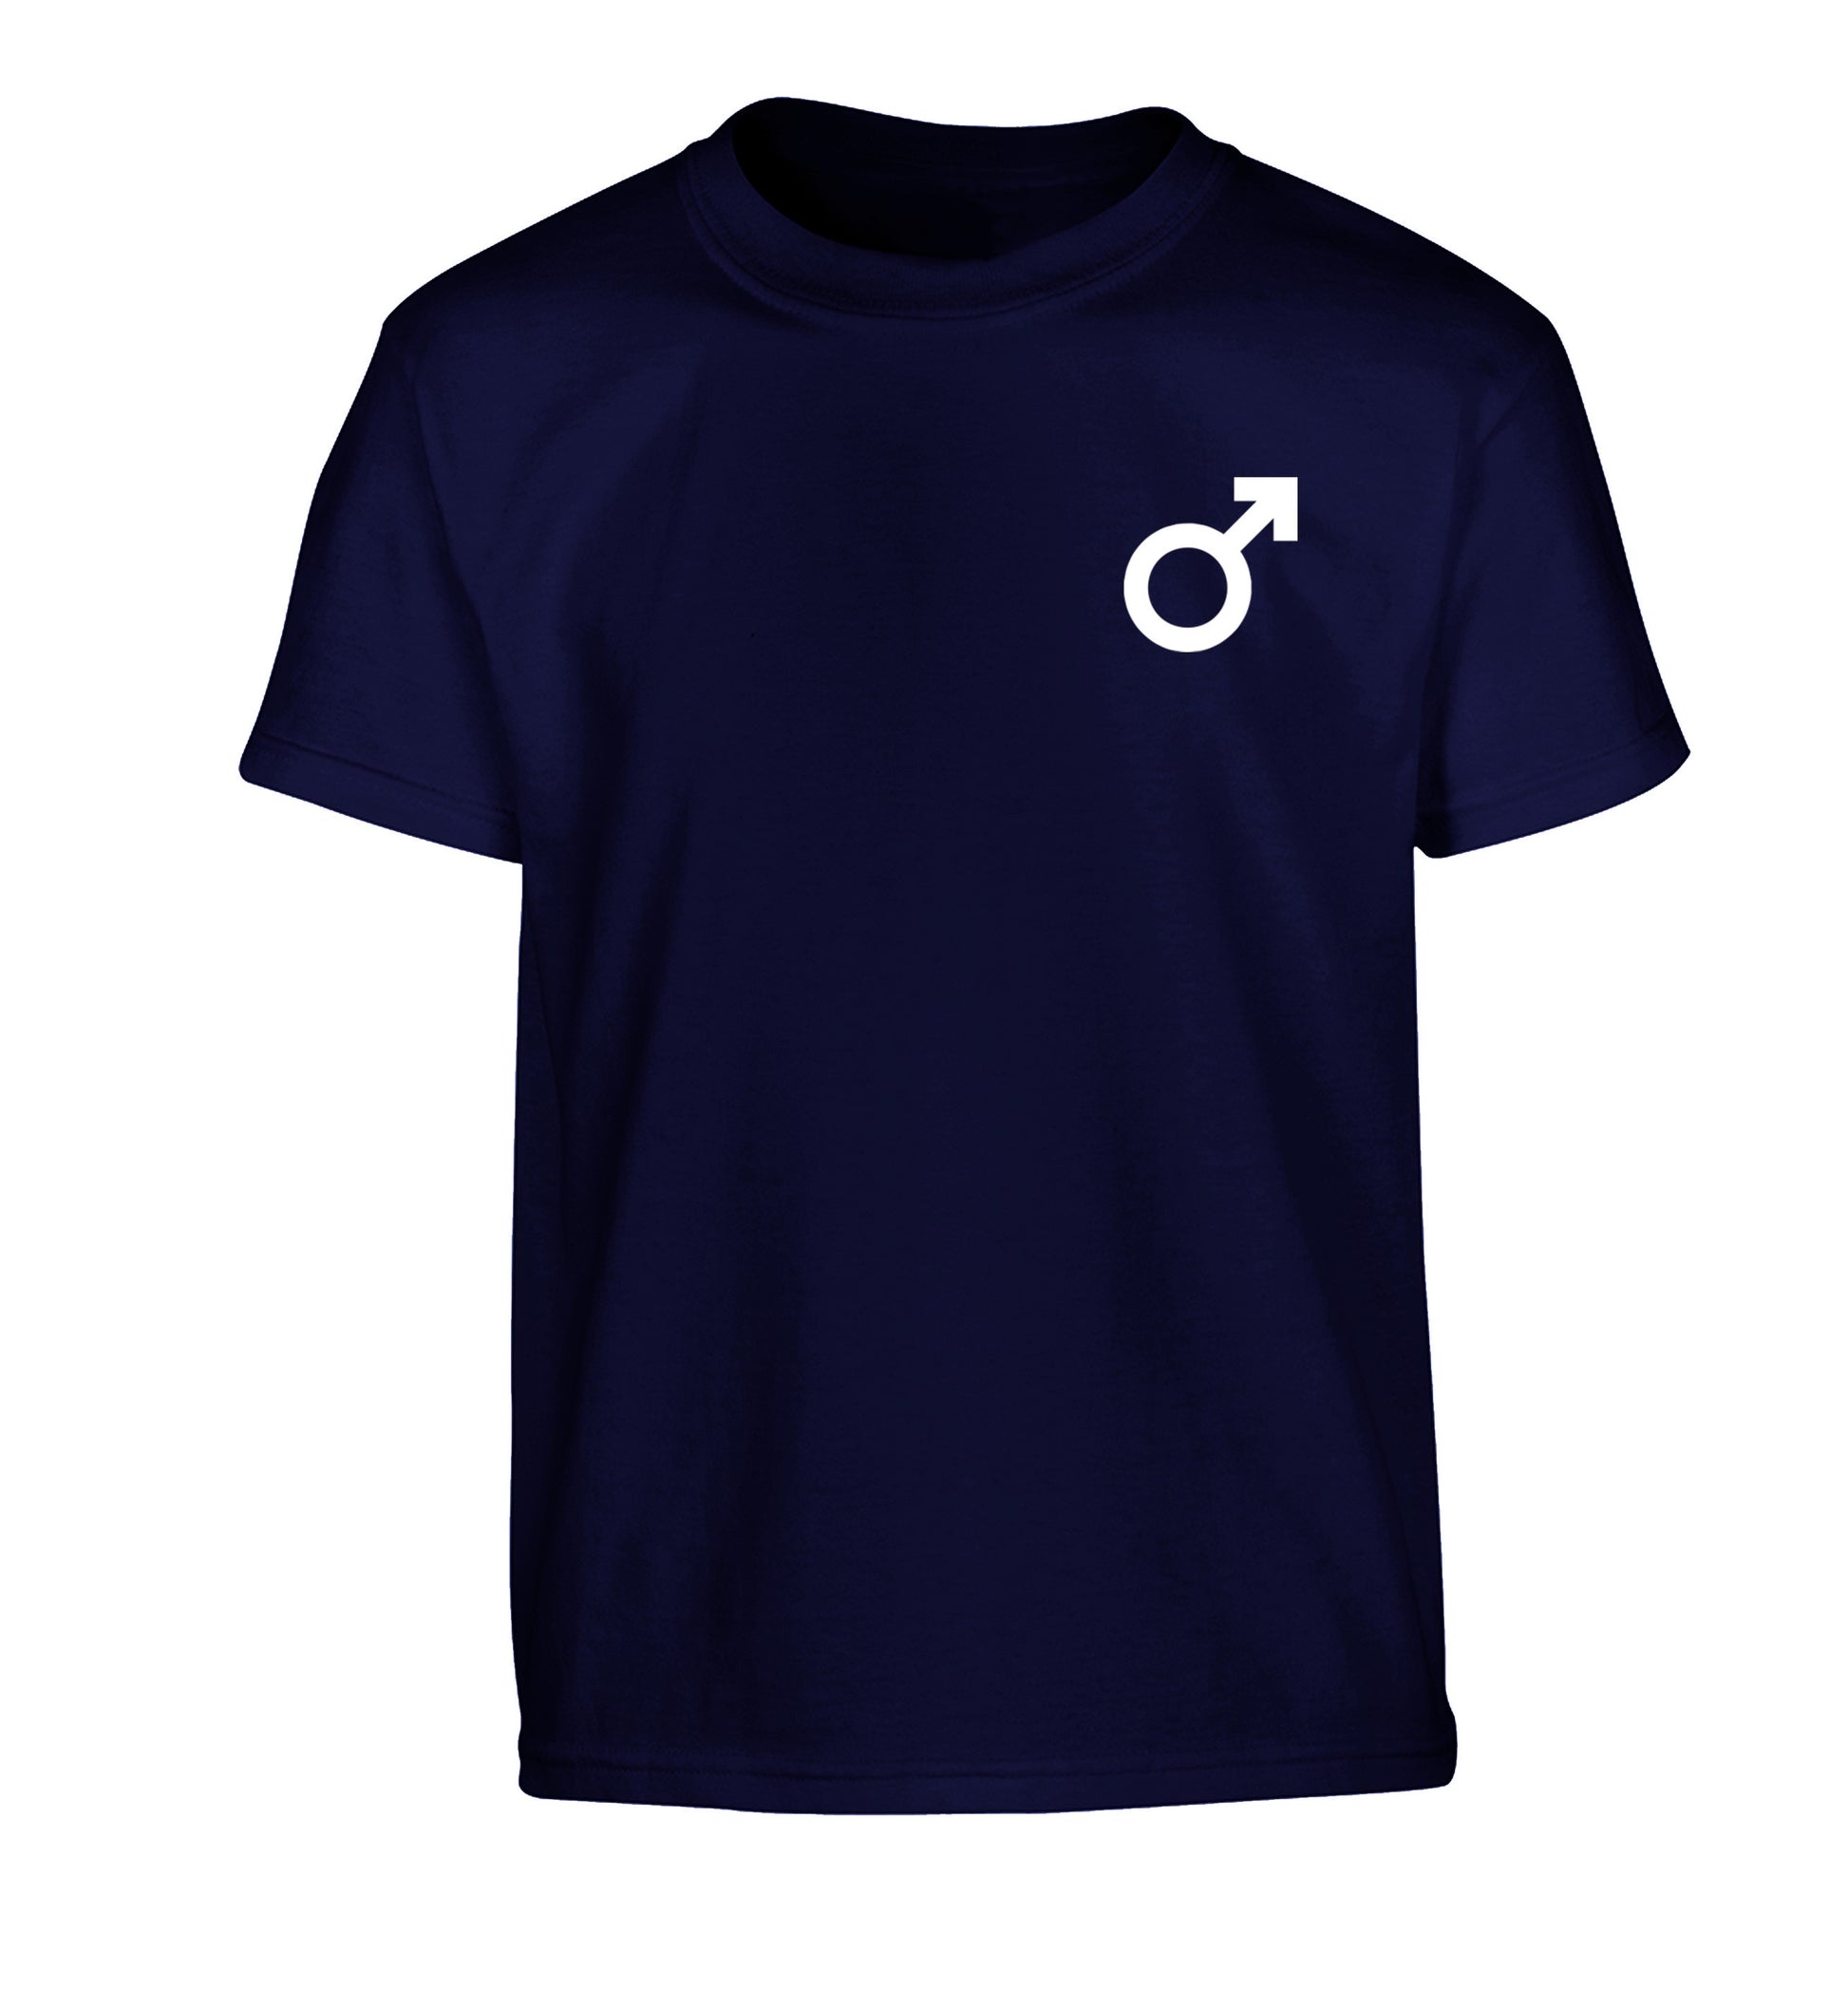 Male symbol pocket Children's navy Tshirt 12-14 Years